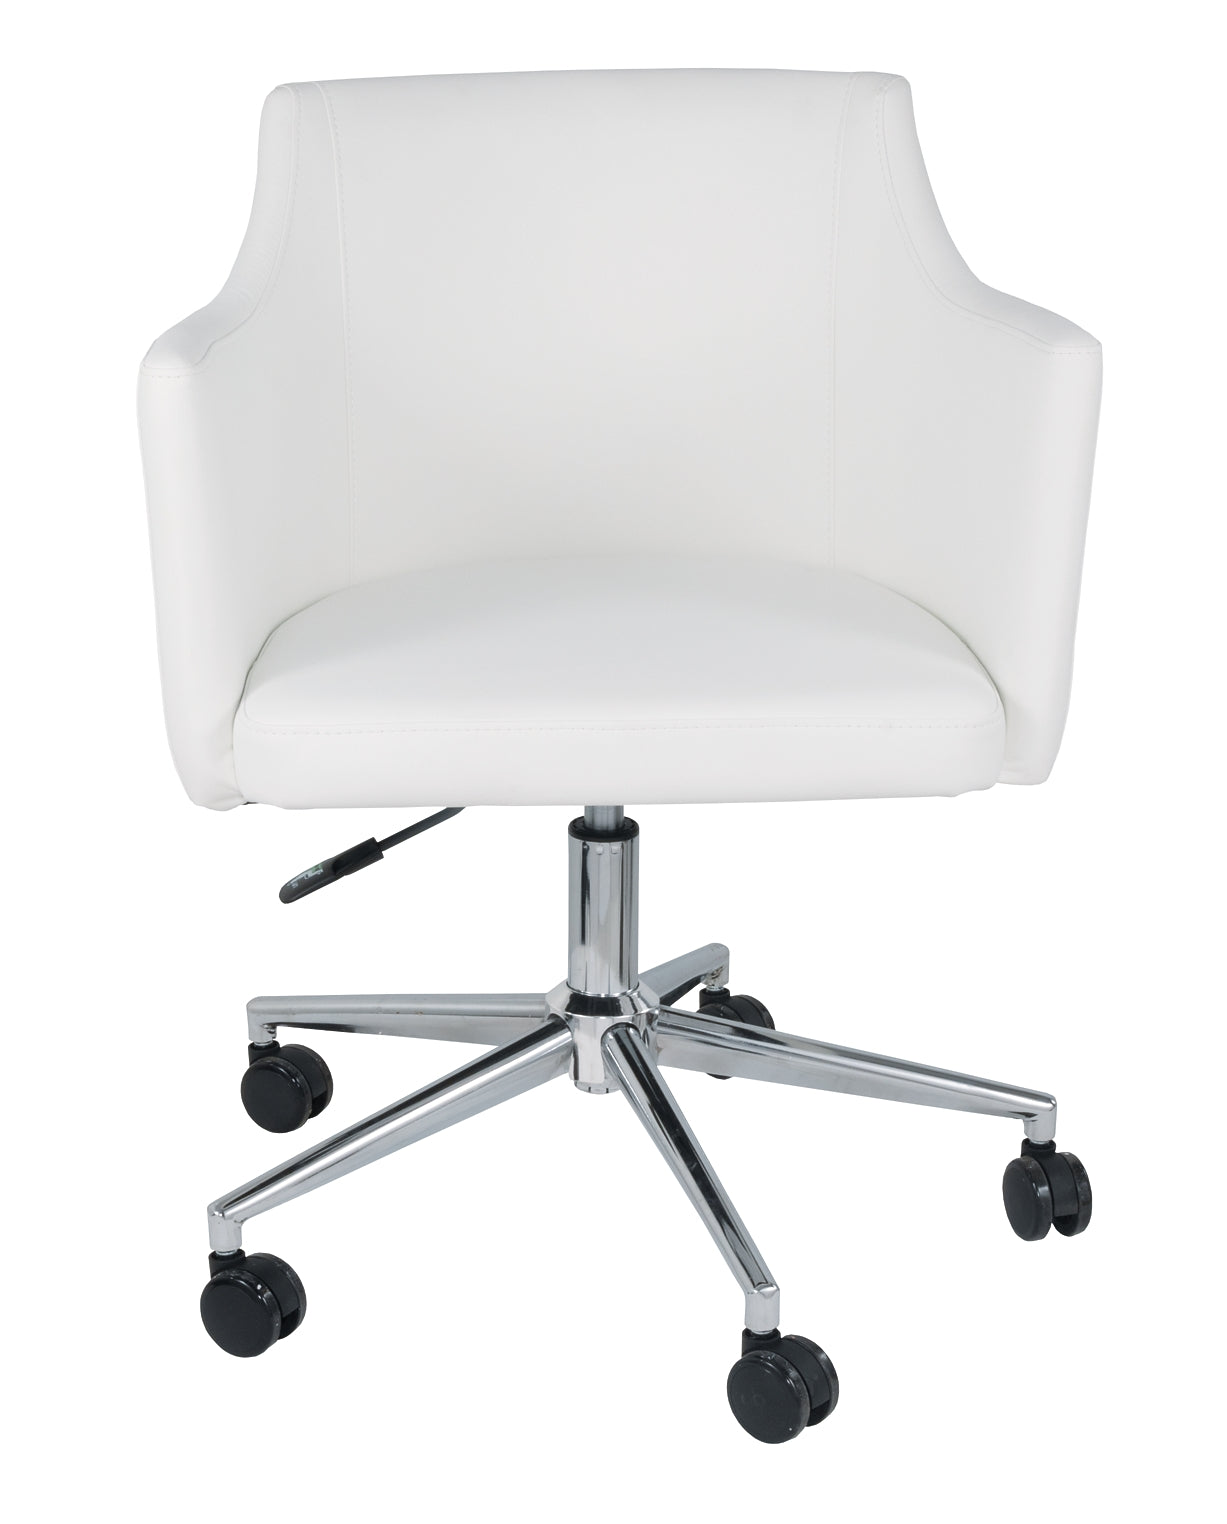 Baraga Home Office Swivel Desk Chair